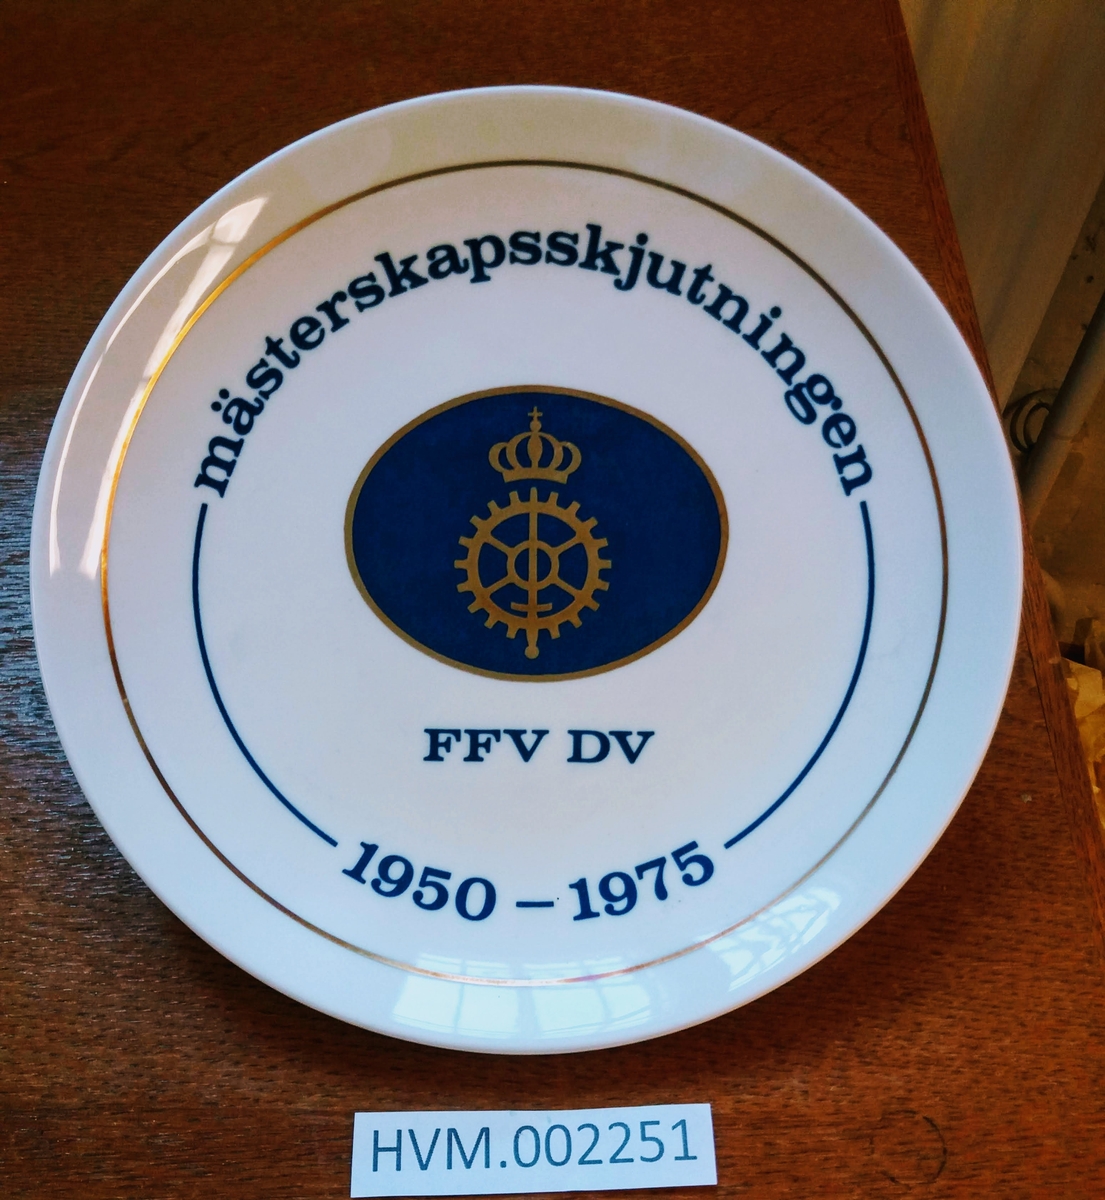 Tallrik porslin, FFV DV 1950 - 1975